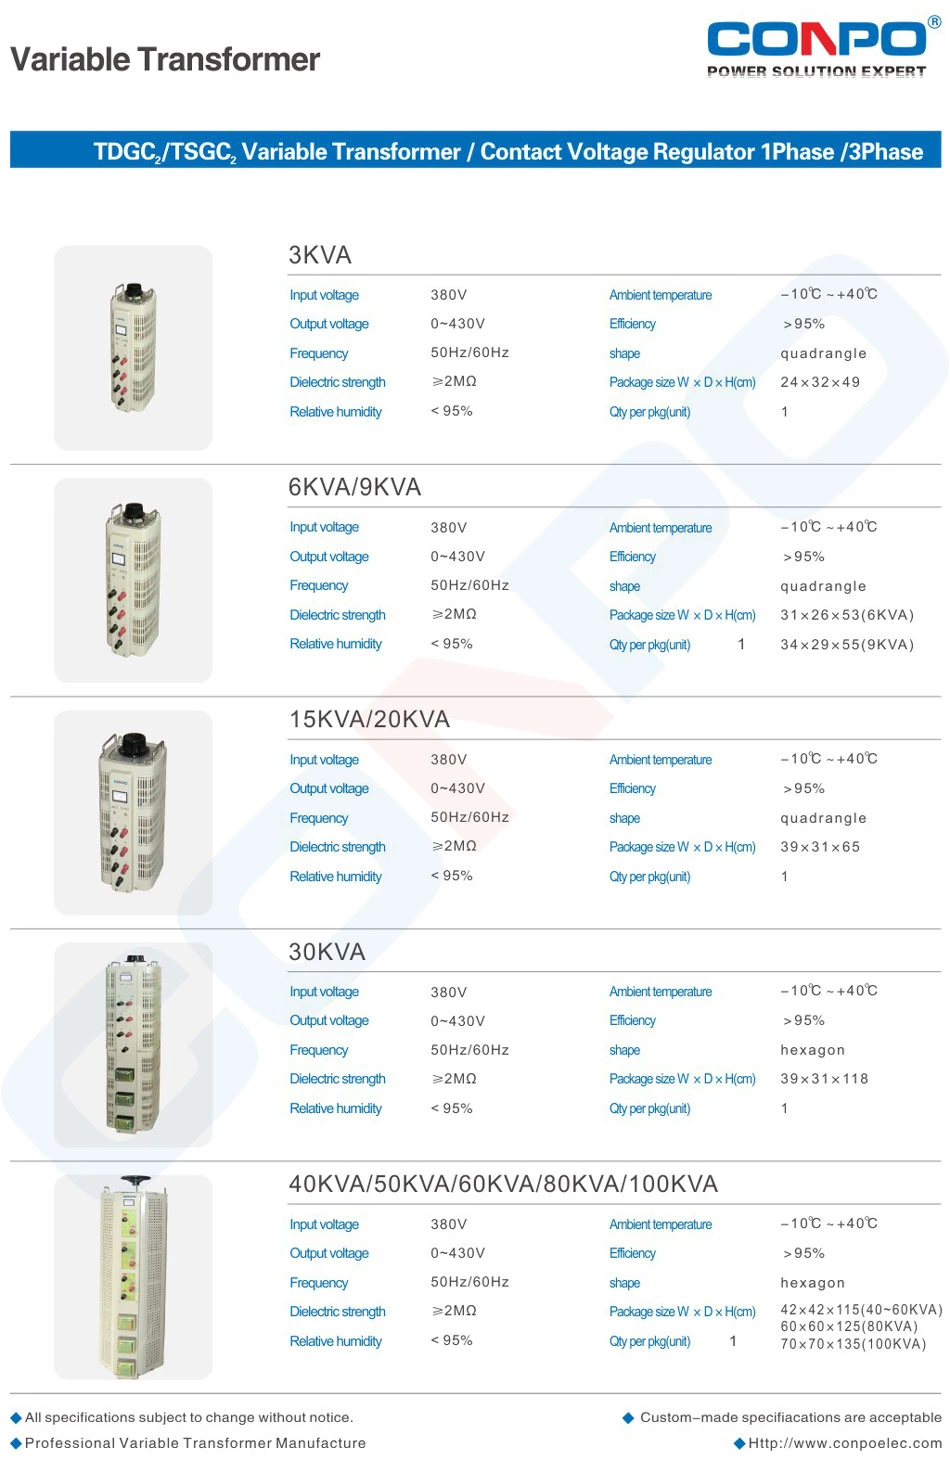 Tsgc2-40kVA, 50kVA, 60kVA 3phase Contact Voltage Regulator/Variable Transformer